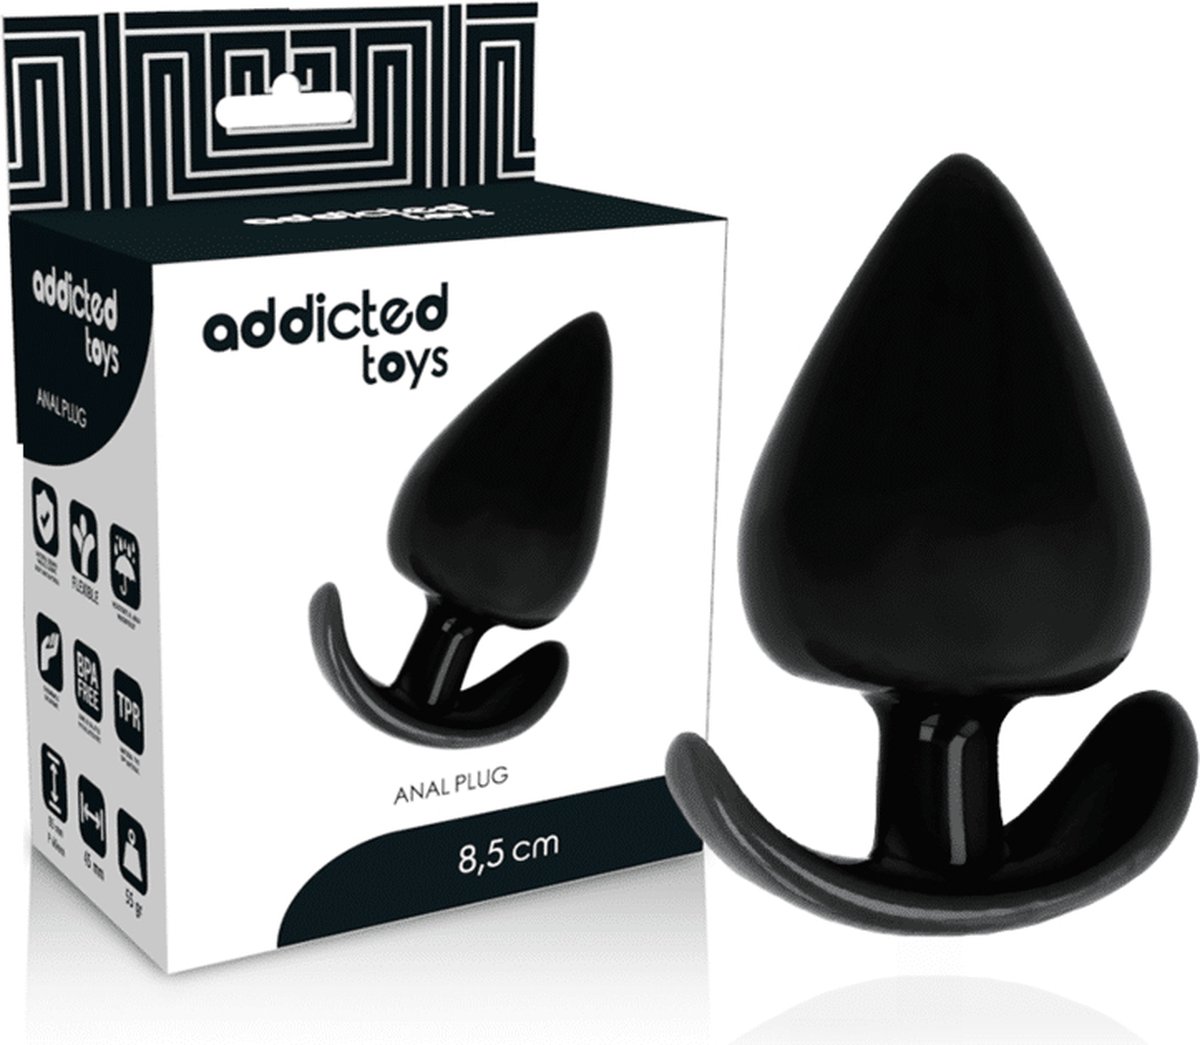 ADDICTED TOYS | Addicted Toys Anal Plug 8.5cm | Sex Toy for Couple | Buttplug | Sex Toy for Man | Sex Toy